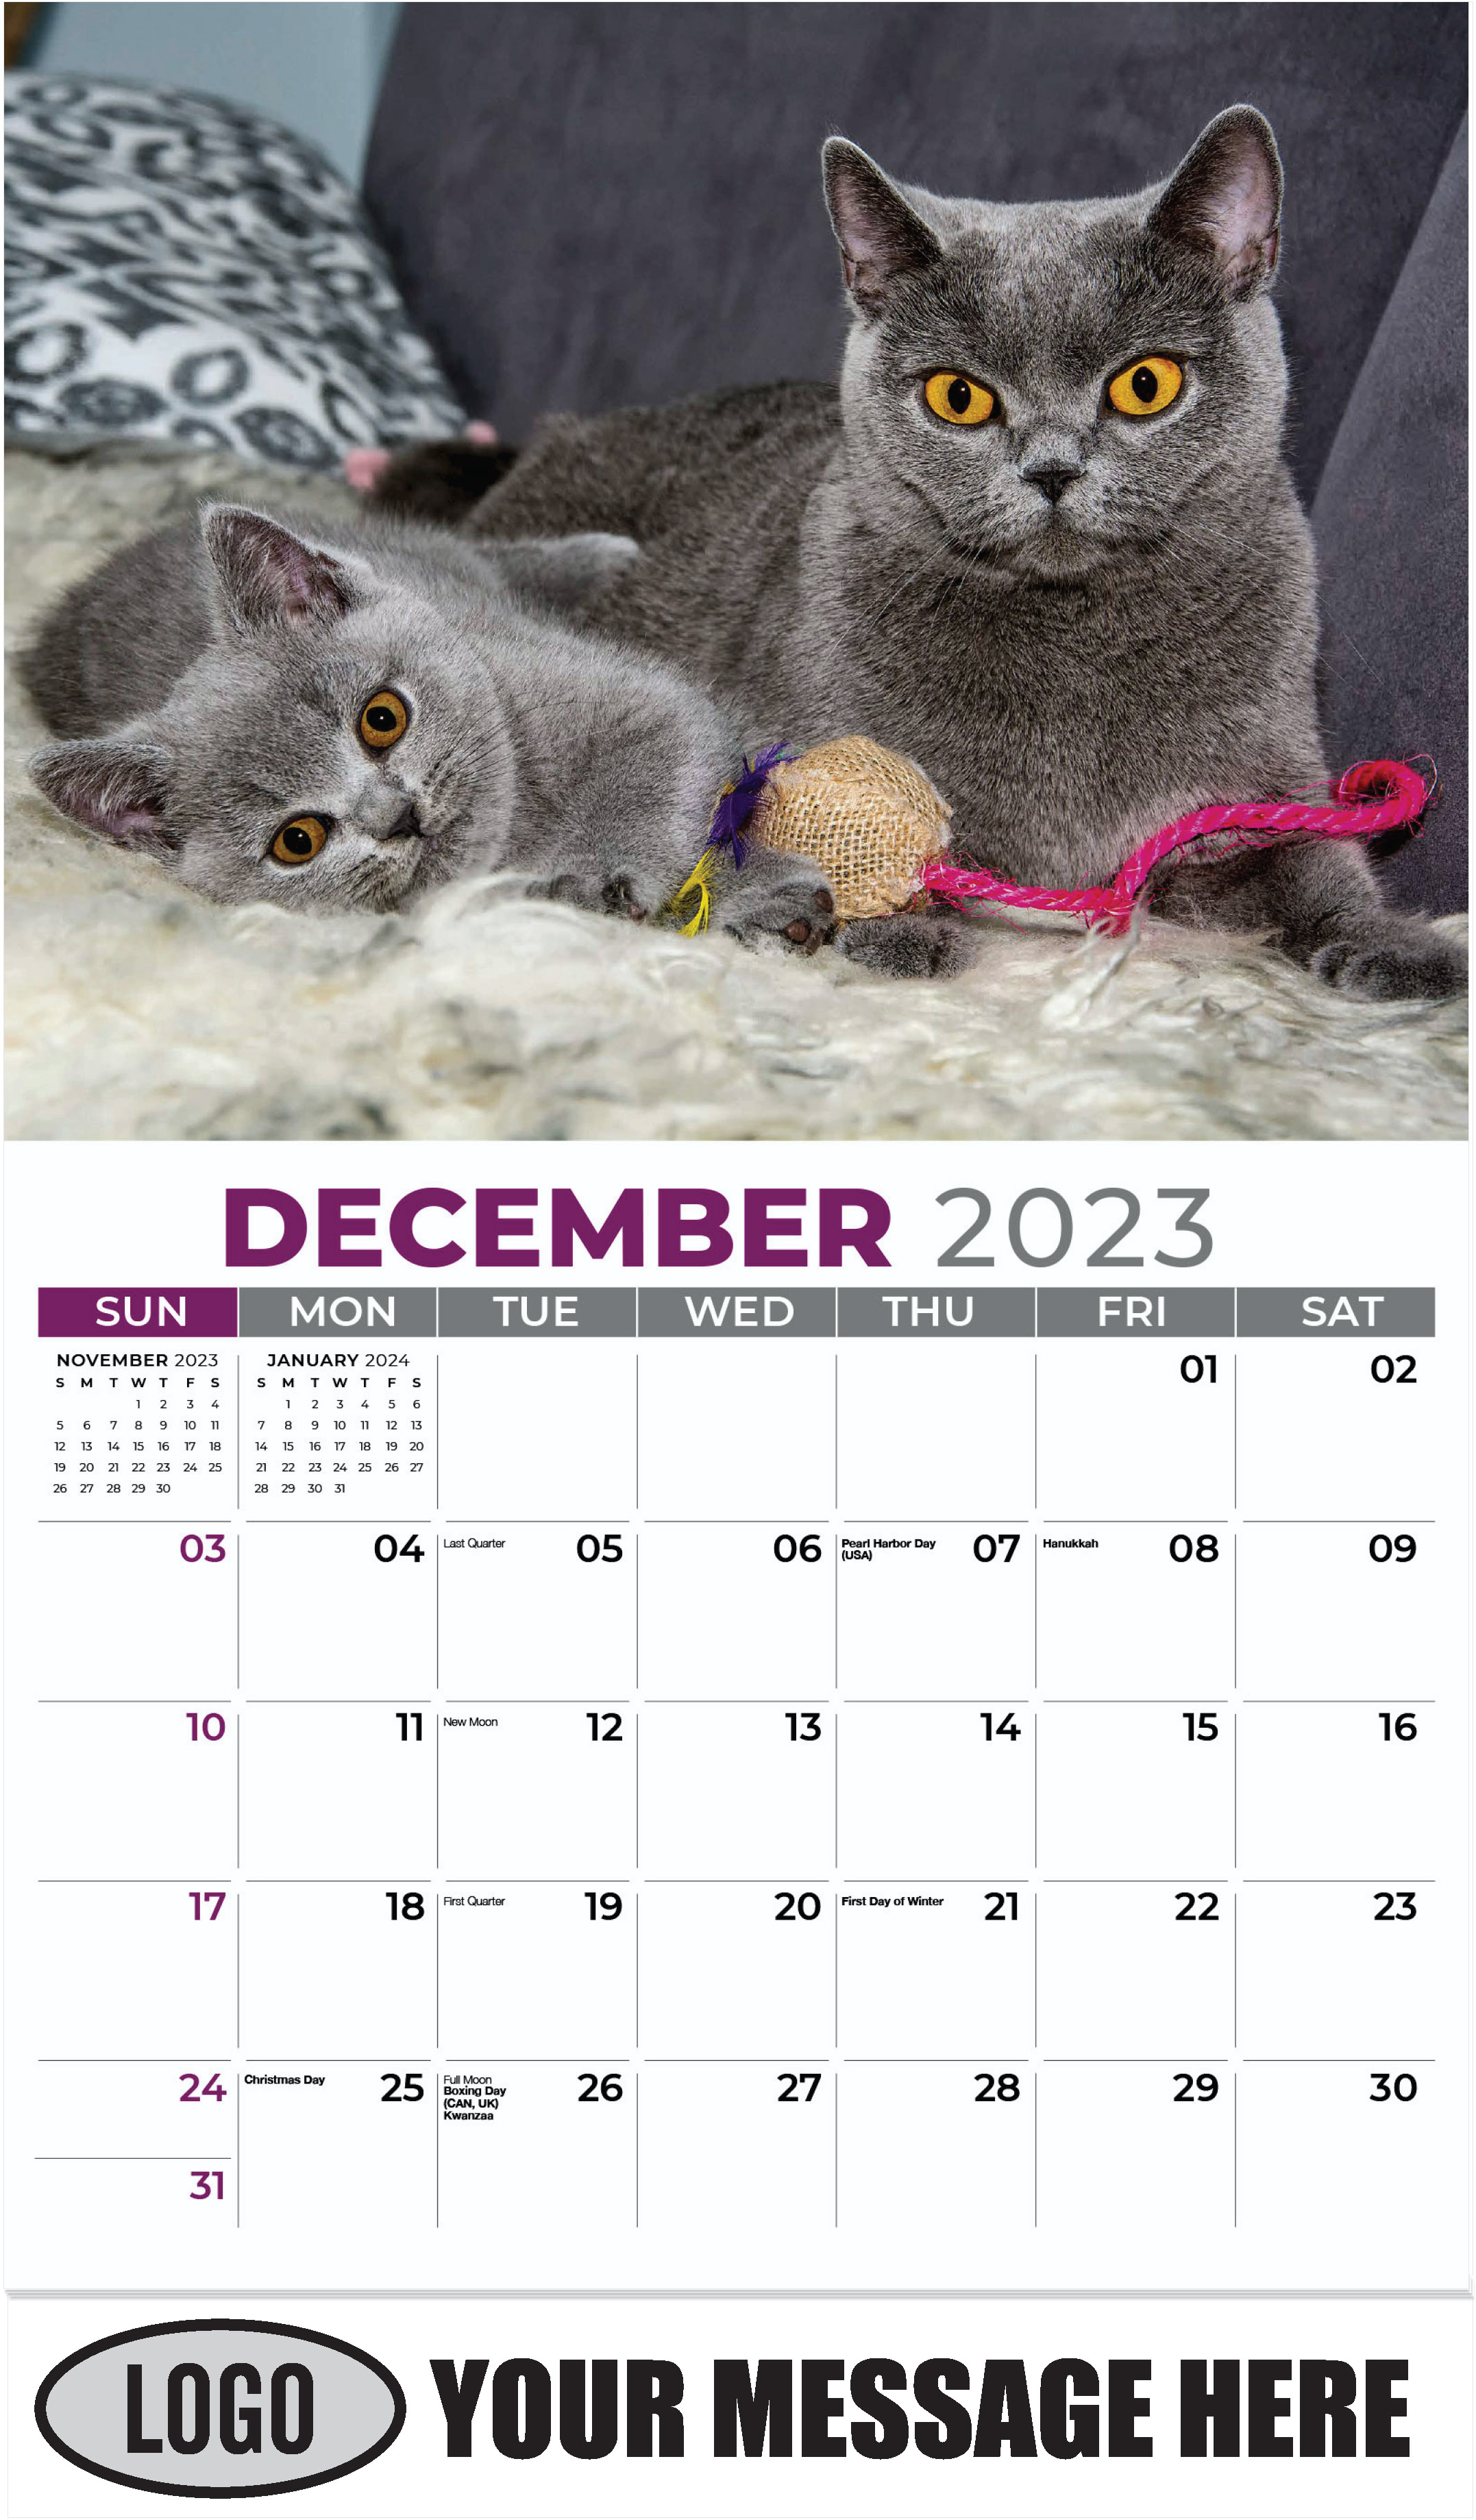 British blue shorthair - December 2023 - Pets 2023 Promotional Calendar